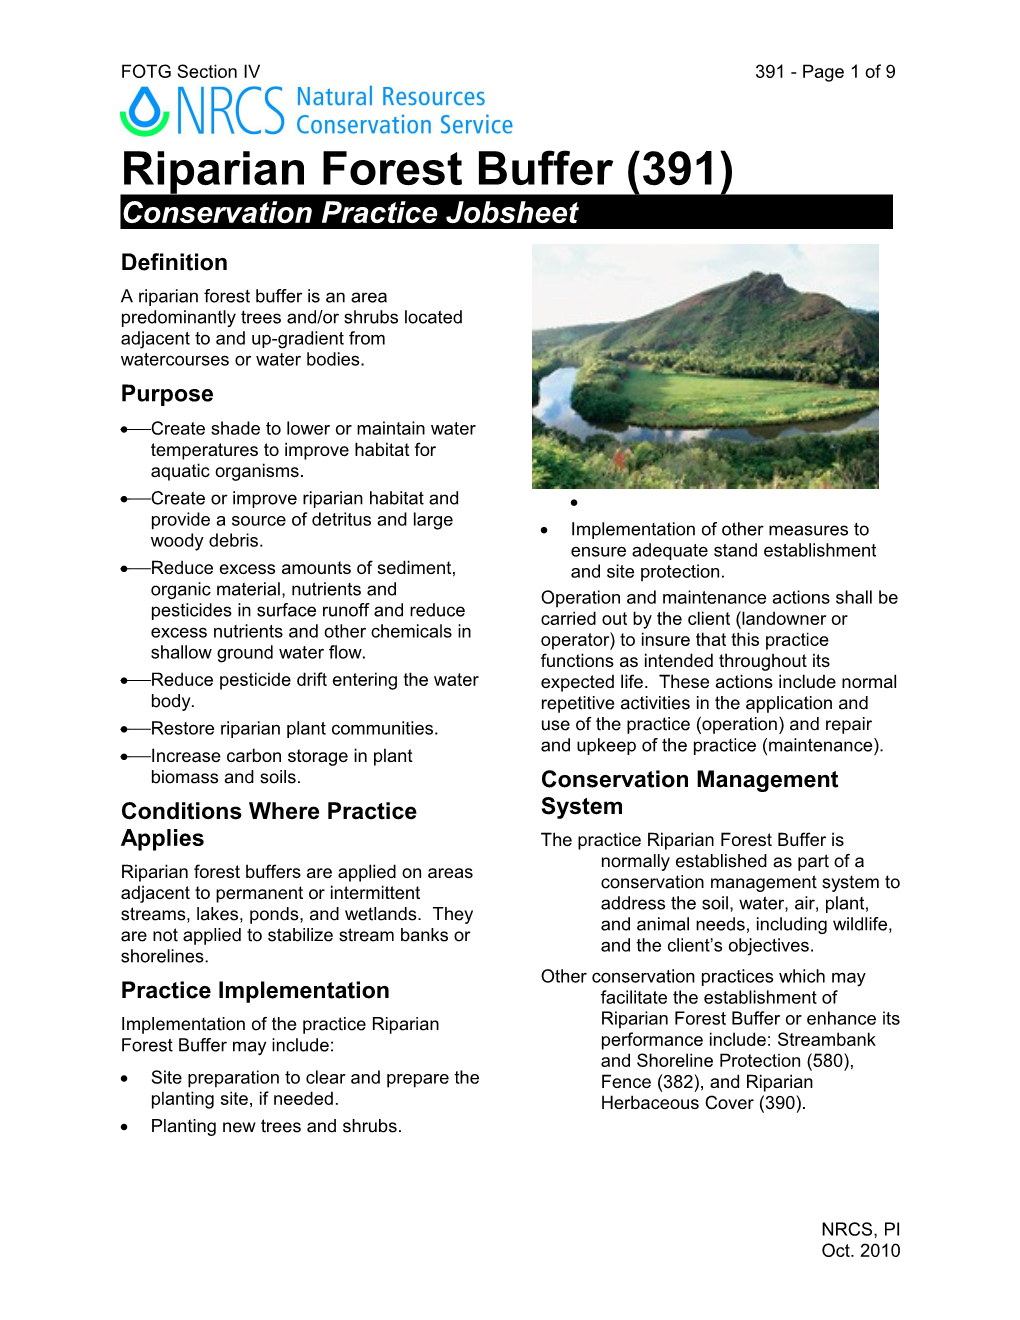 Riparian Forest Buffer (391)